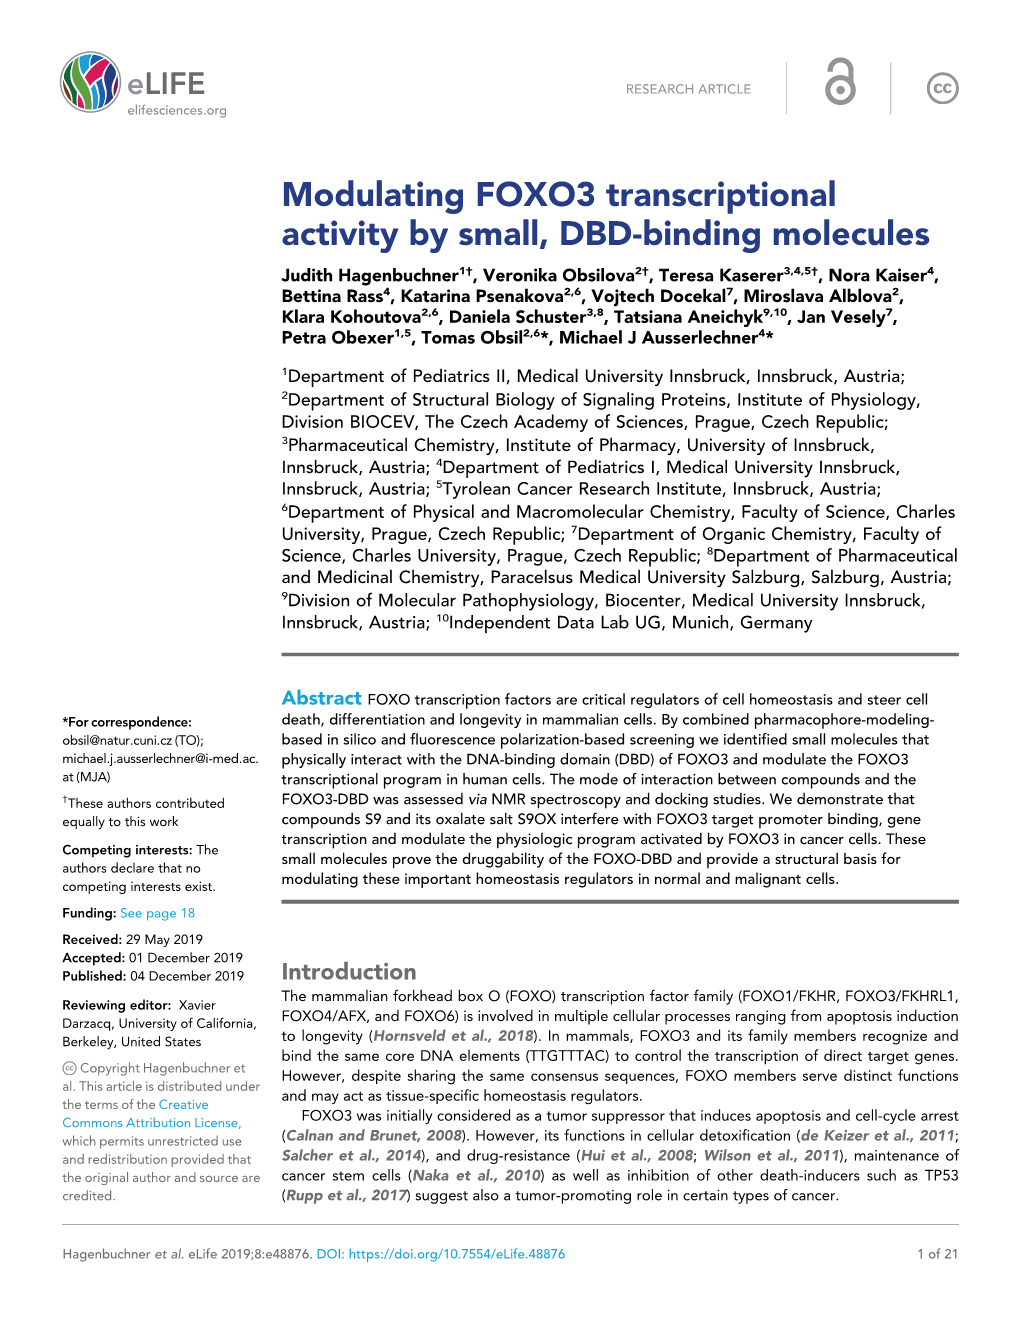 Modulating FOXO3 Transcriptional Activity by Small, DBD-Binding